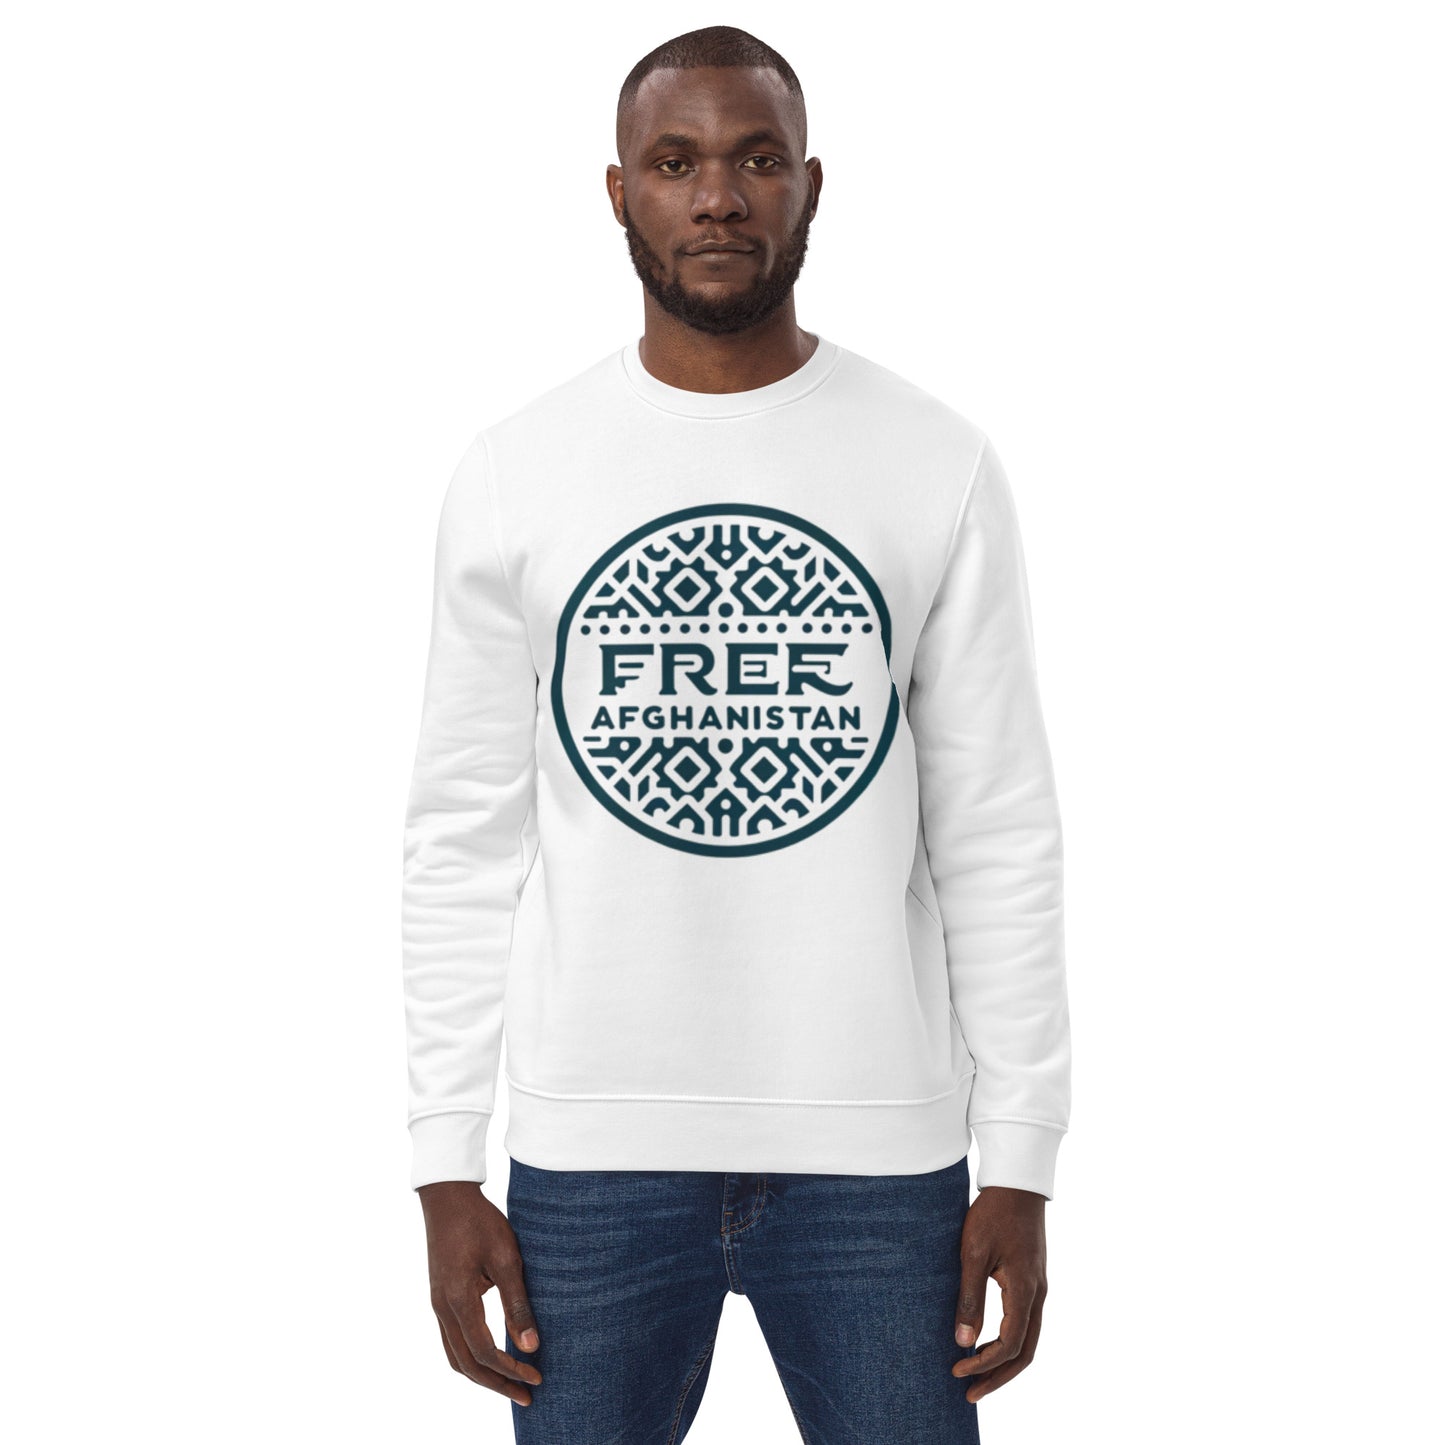 FE033.1 - Unisex Bio-Pullover - Sweater - Sweatshirt - Free Afghanistan 2 - petrol logo